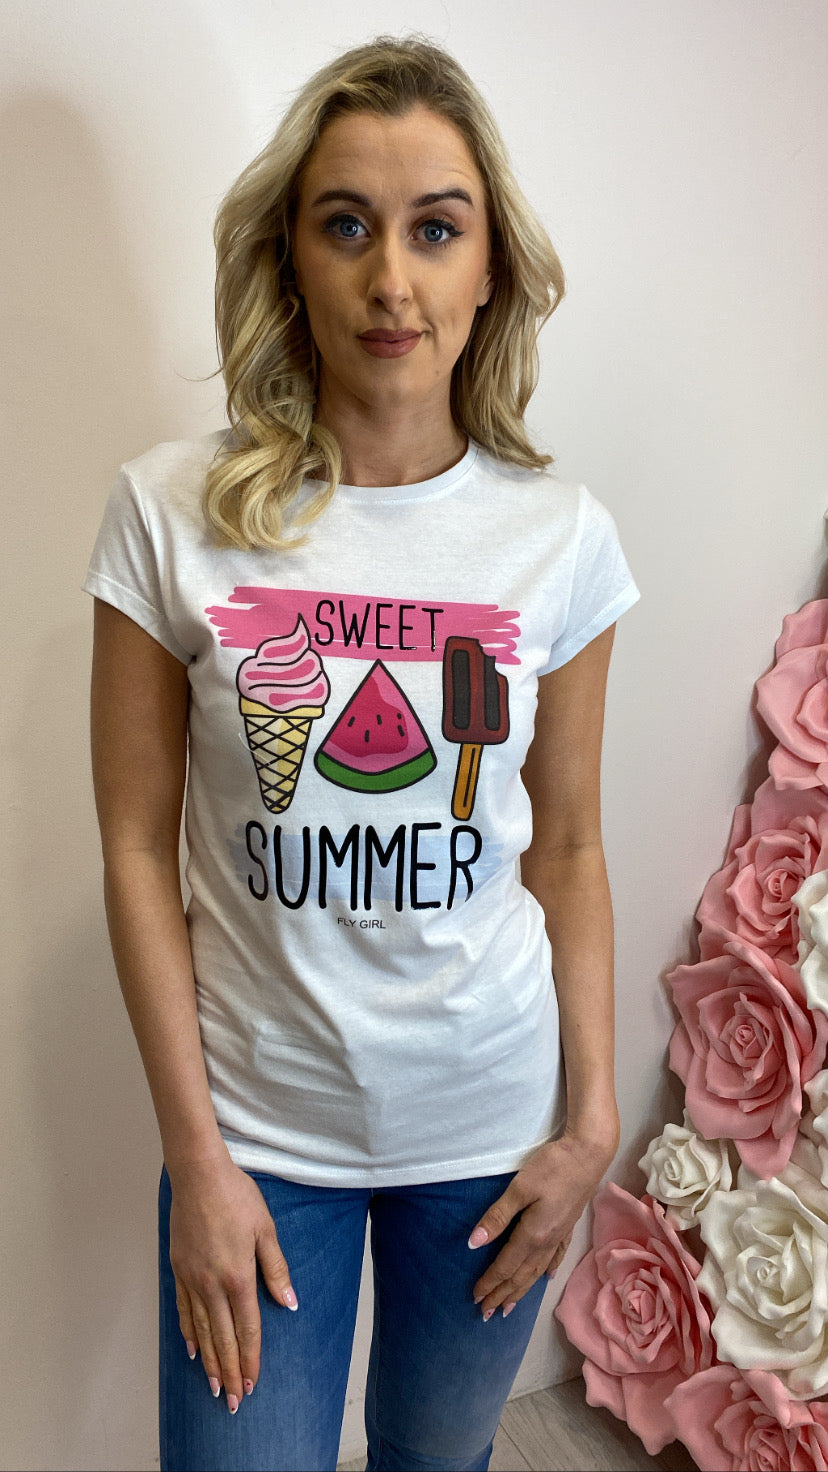 Sweet summer sale fly girl tee 1973/69